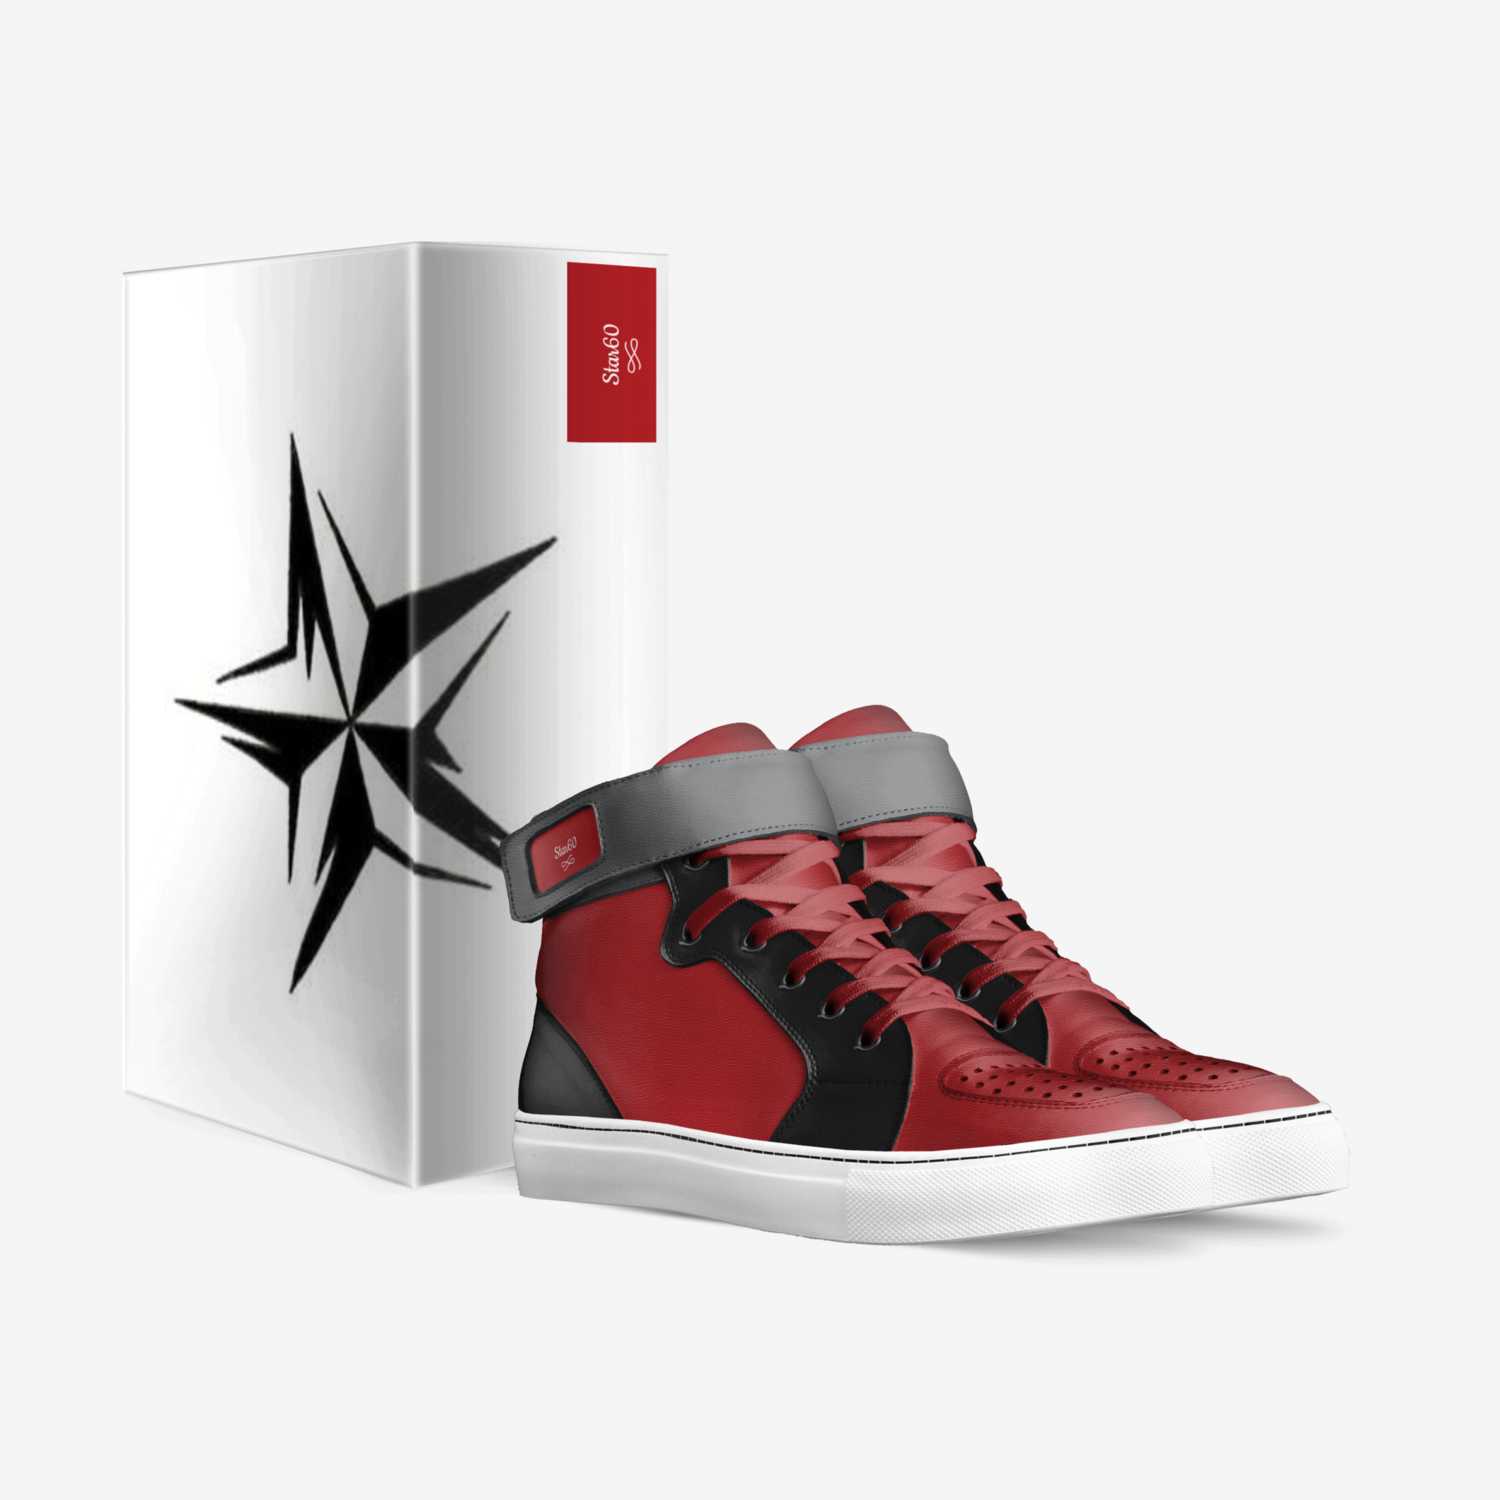 Star custom made in Italy shoes by Ashton Dakota | Box view